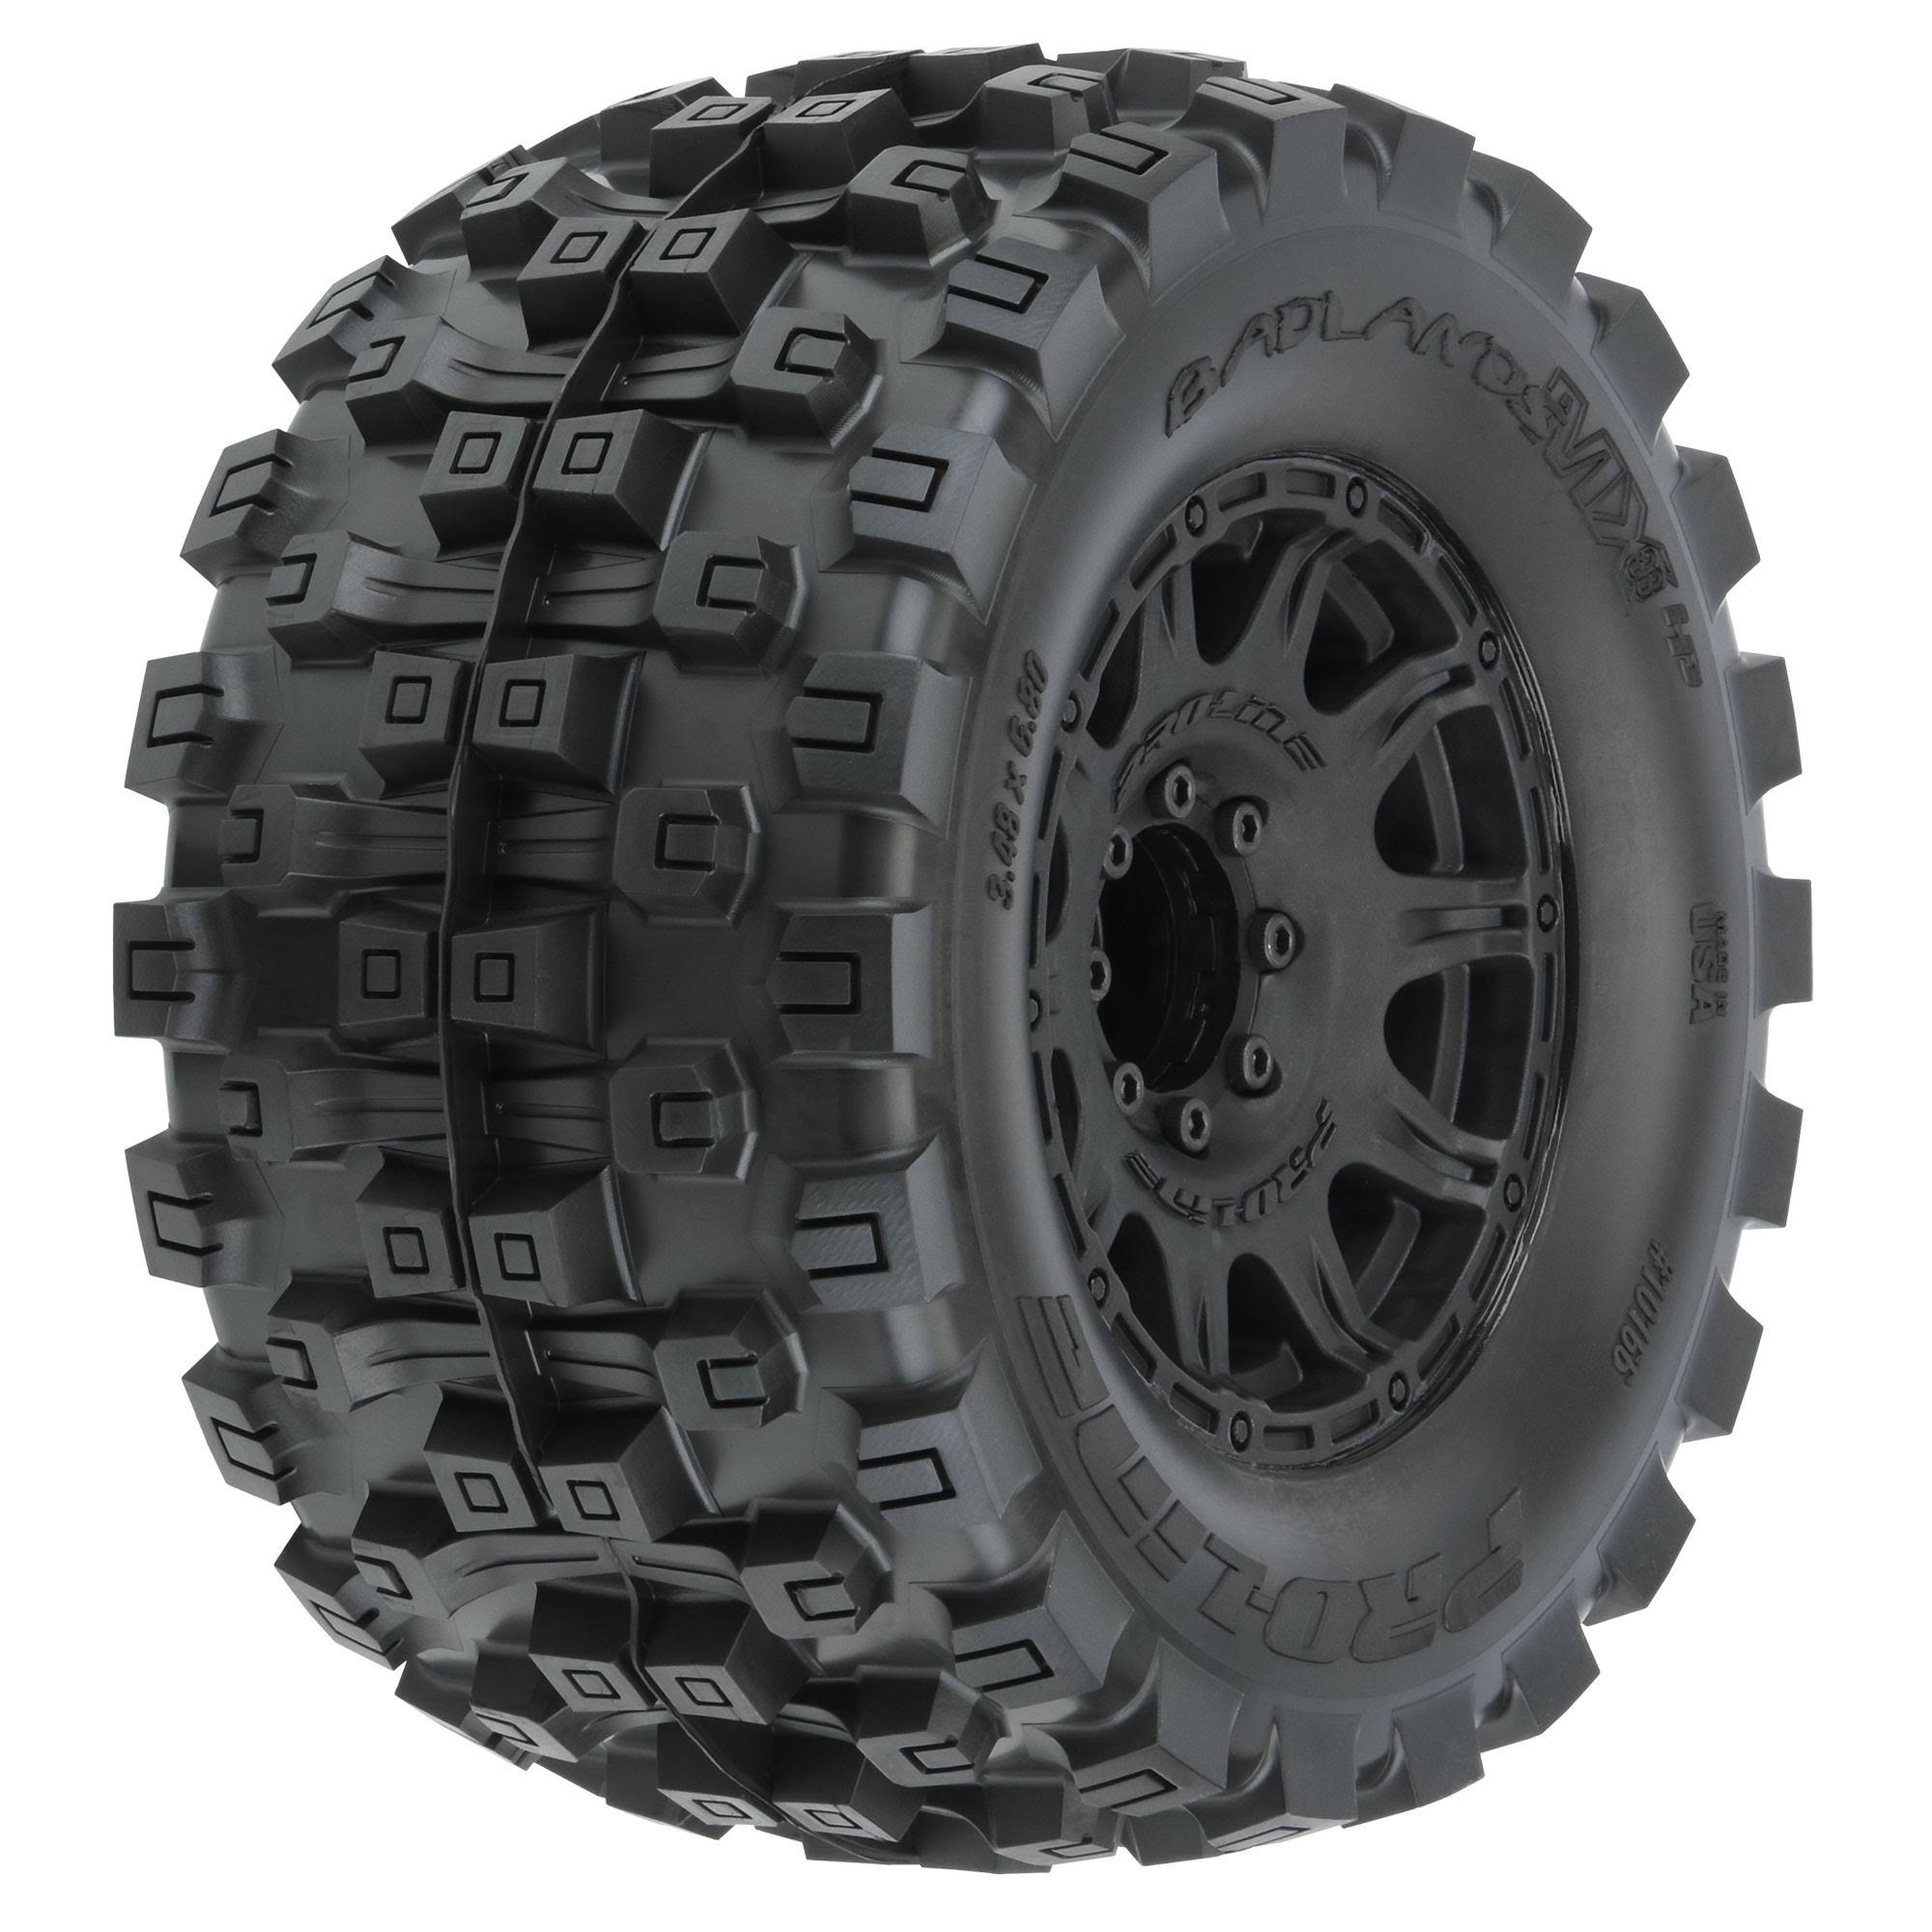 Pro Line Badlands MX38 HP 3.8" Belted & Mounted Raid Tires PRO1016610